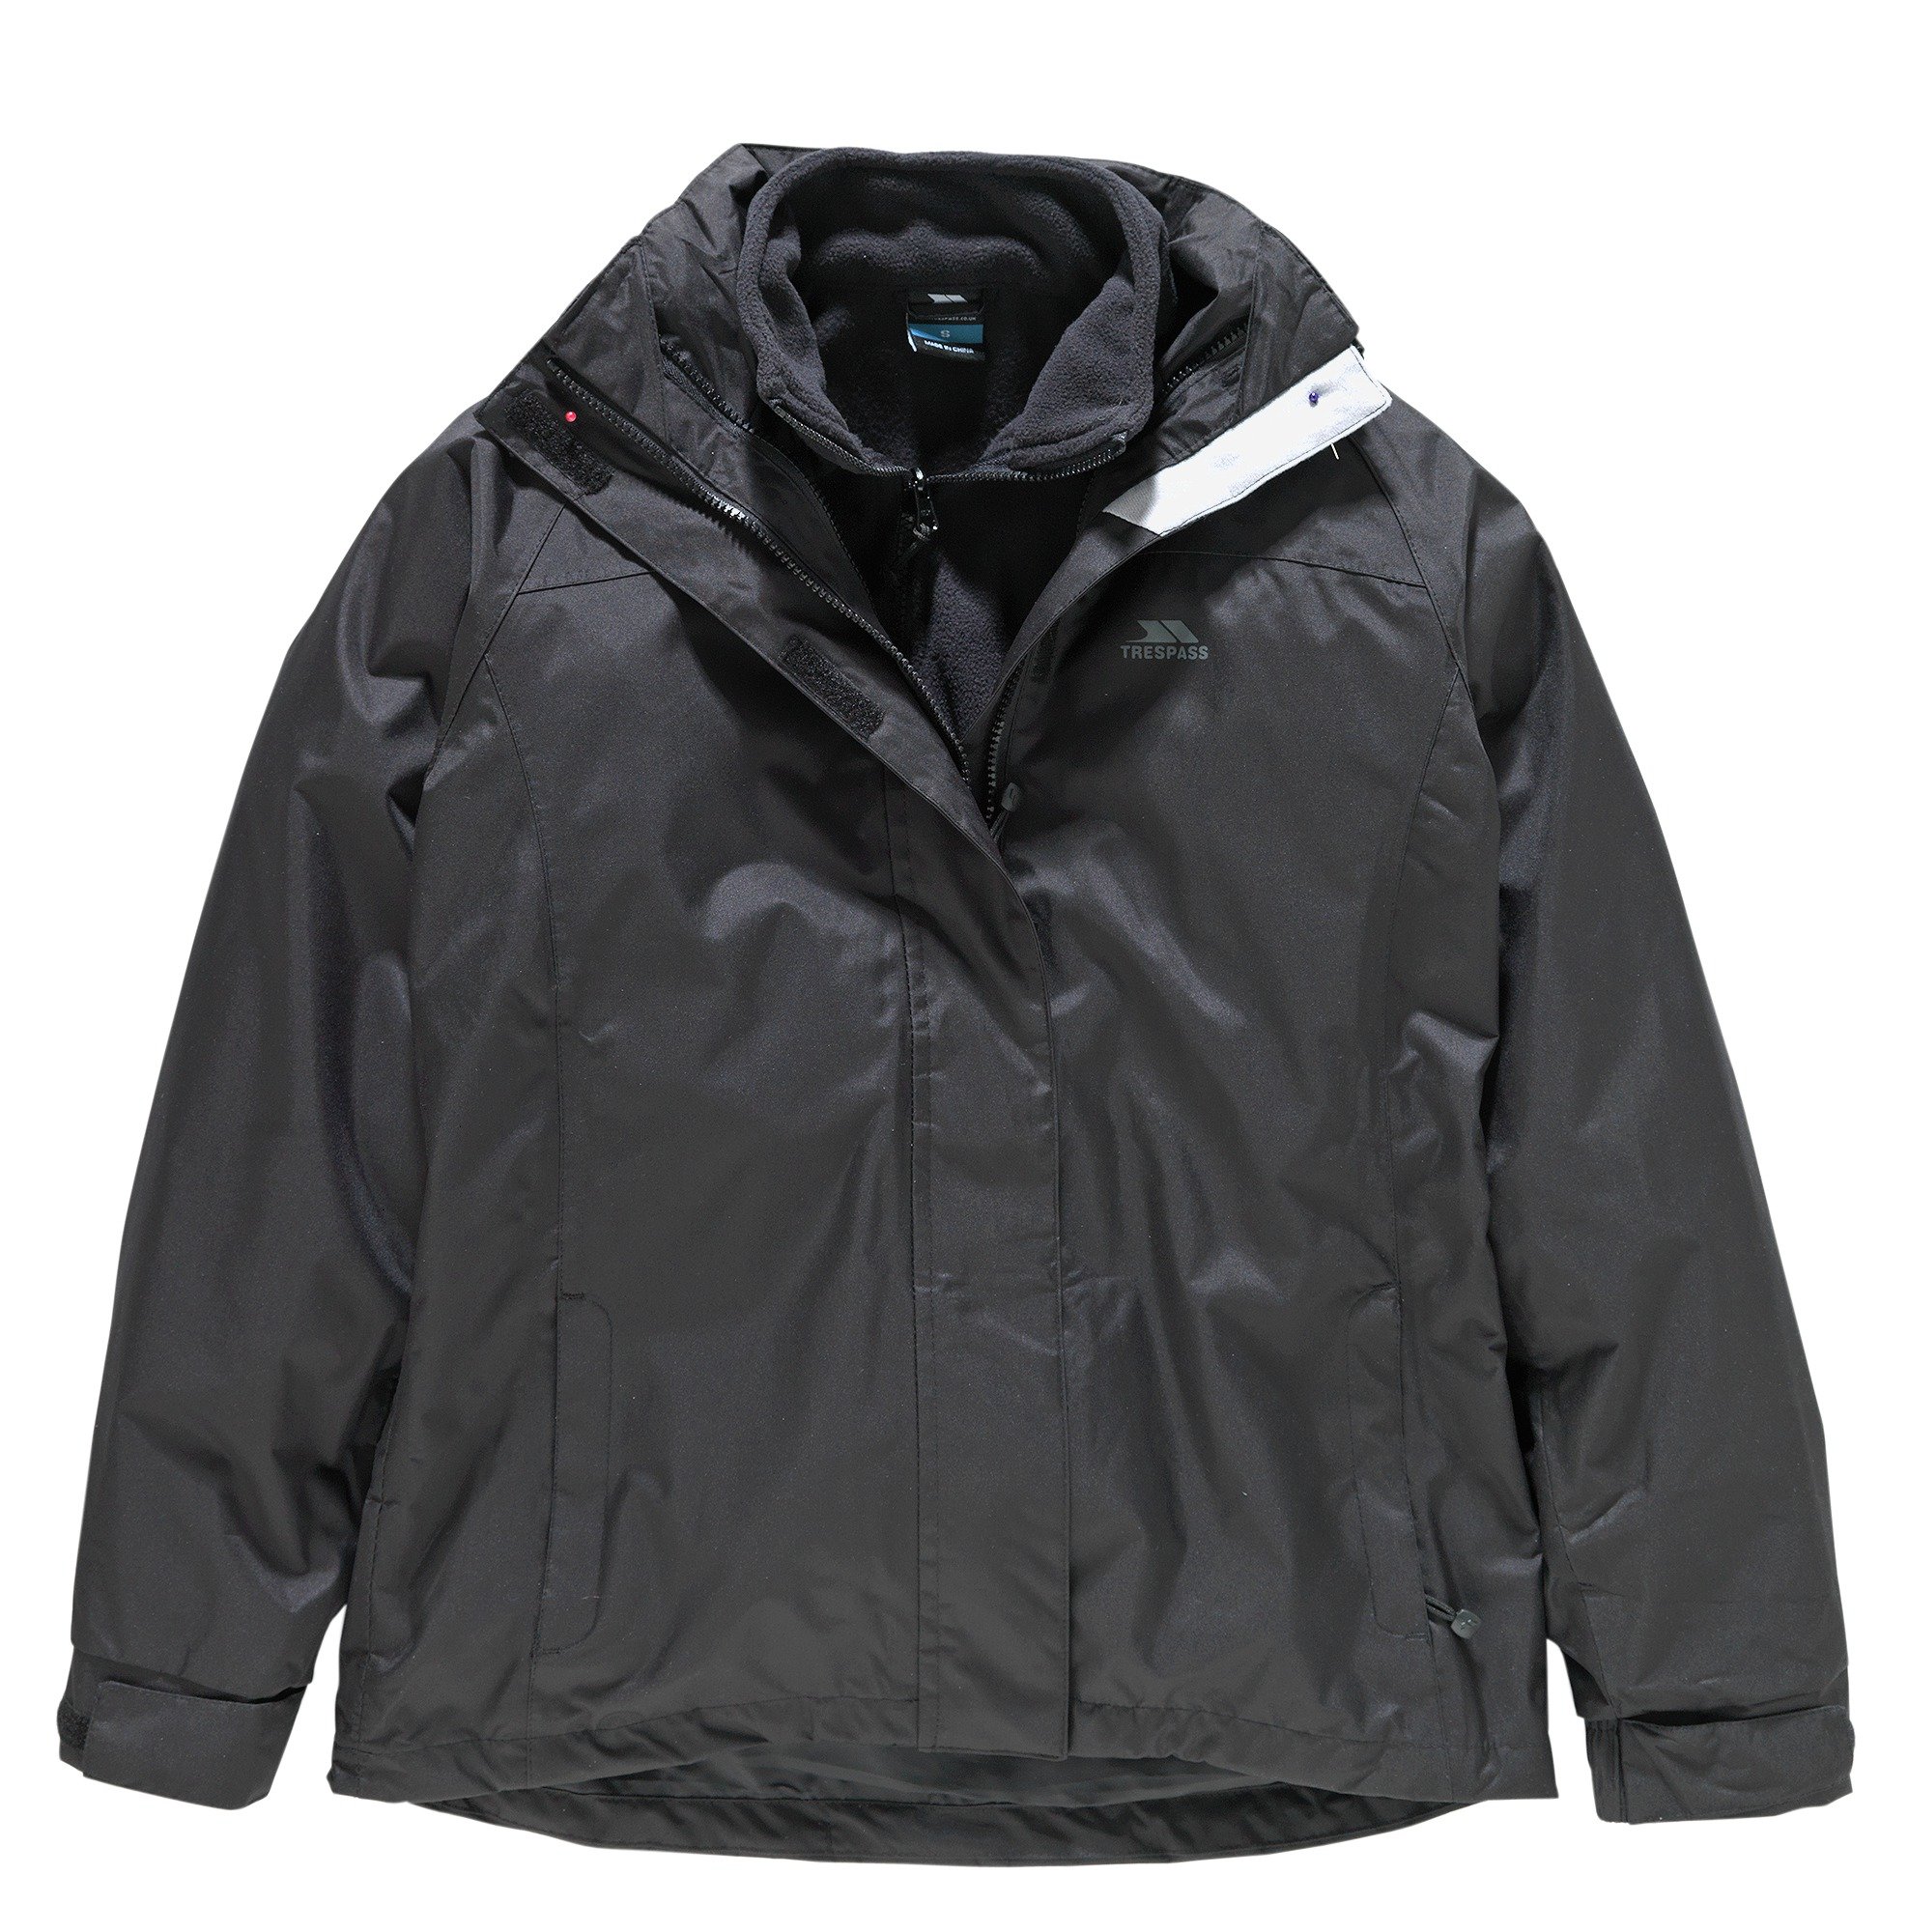 Trespass Black 3-in-1 Jacket & Fleece - Extra Large